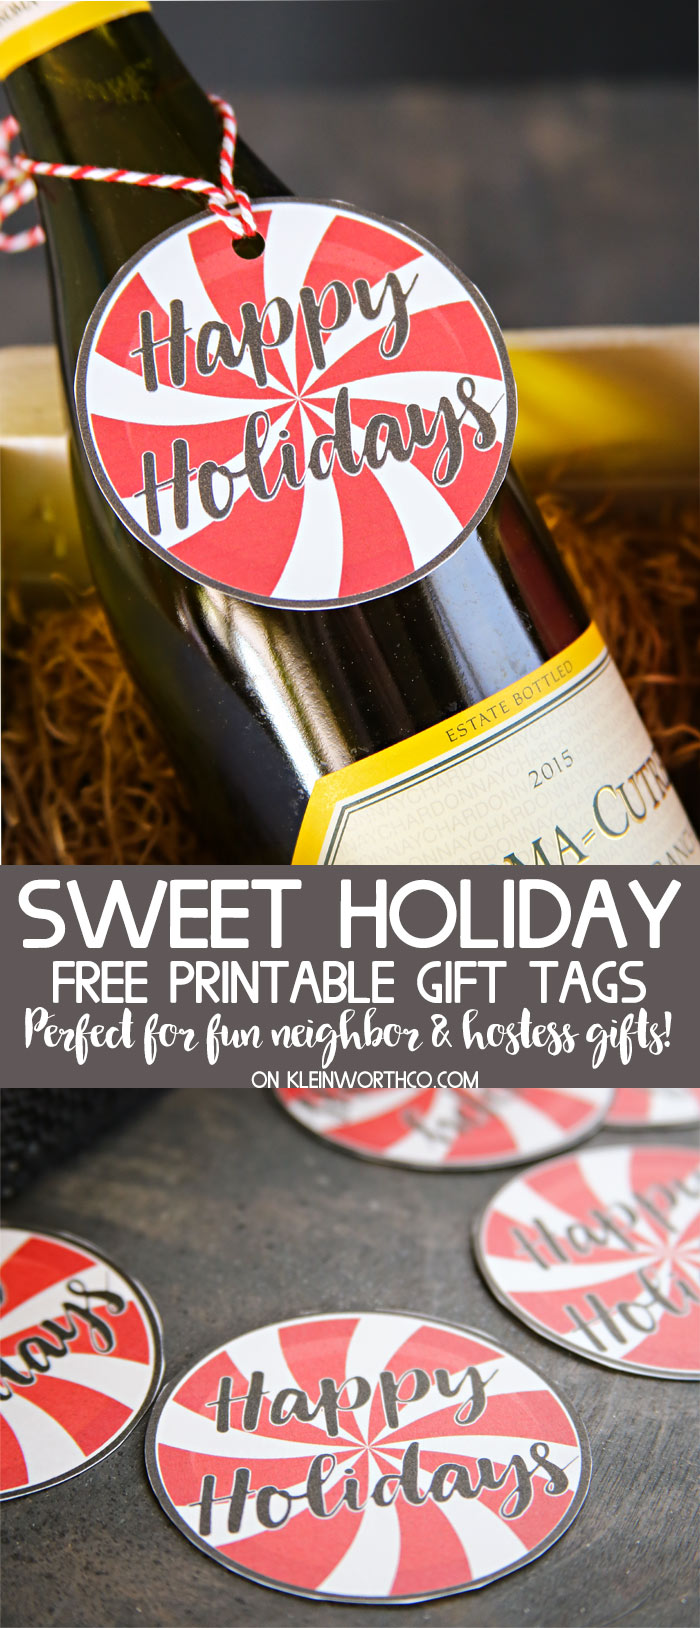 Sweet Holiday Gift Tags Free Printable